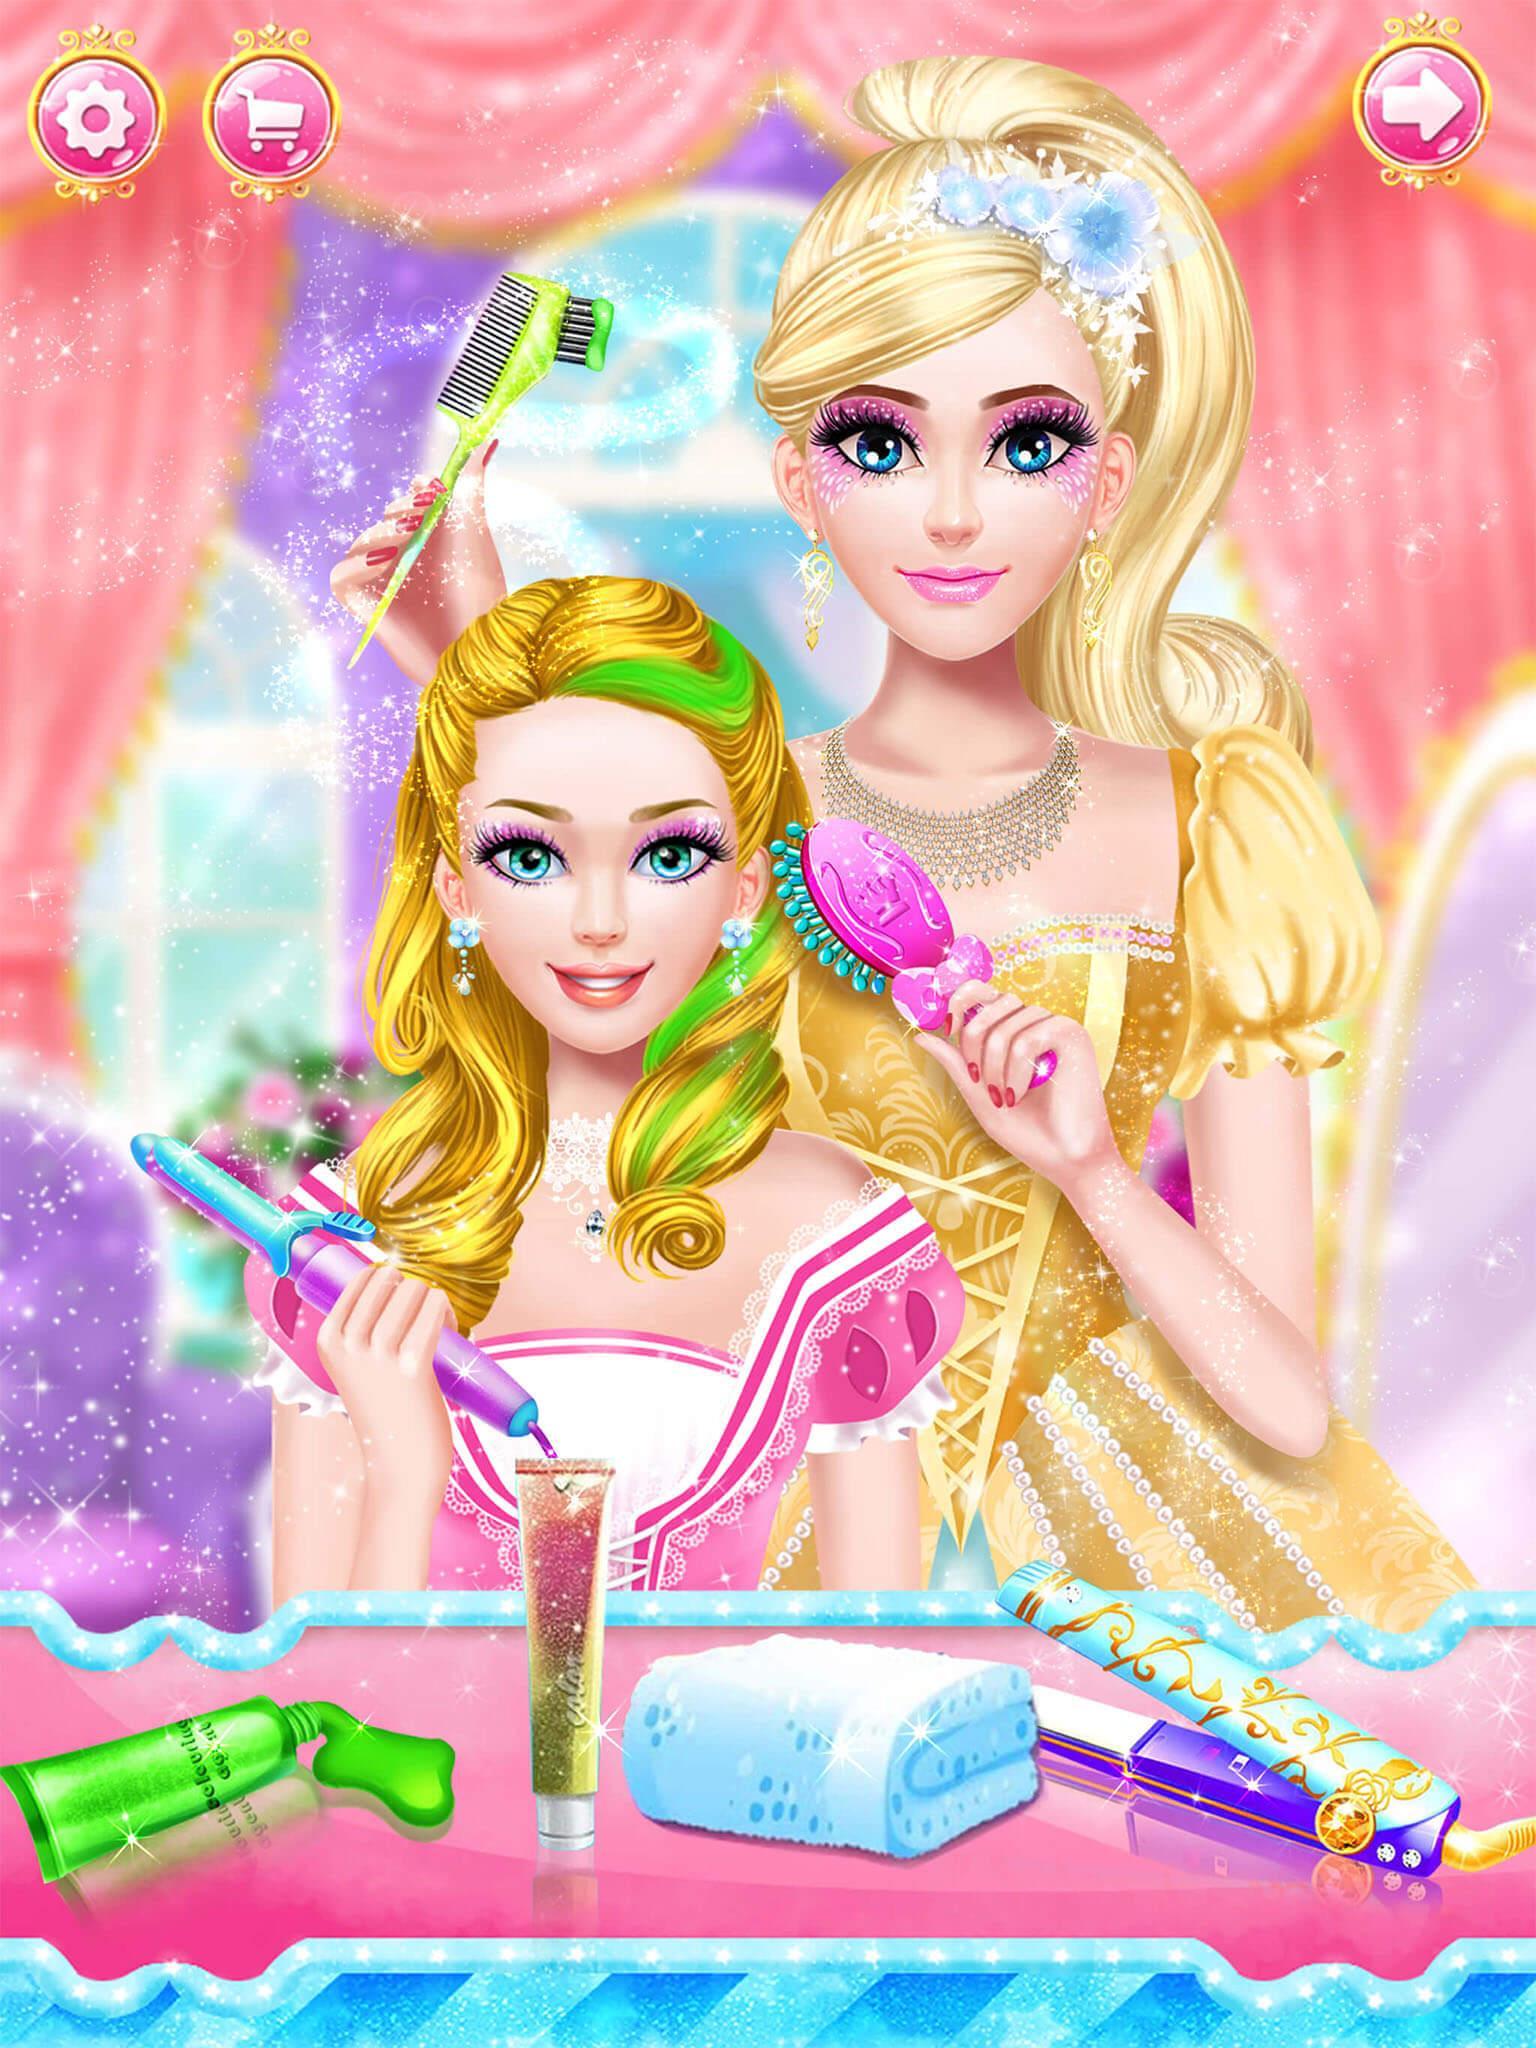 Princess dress up and makeover games 1.3.7 Screenshot 8